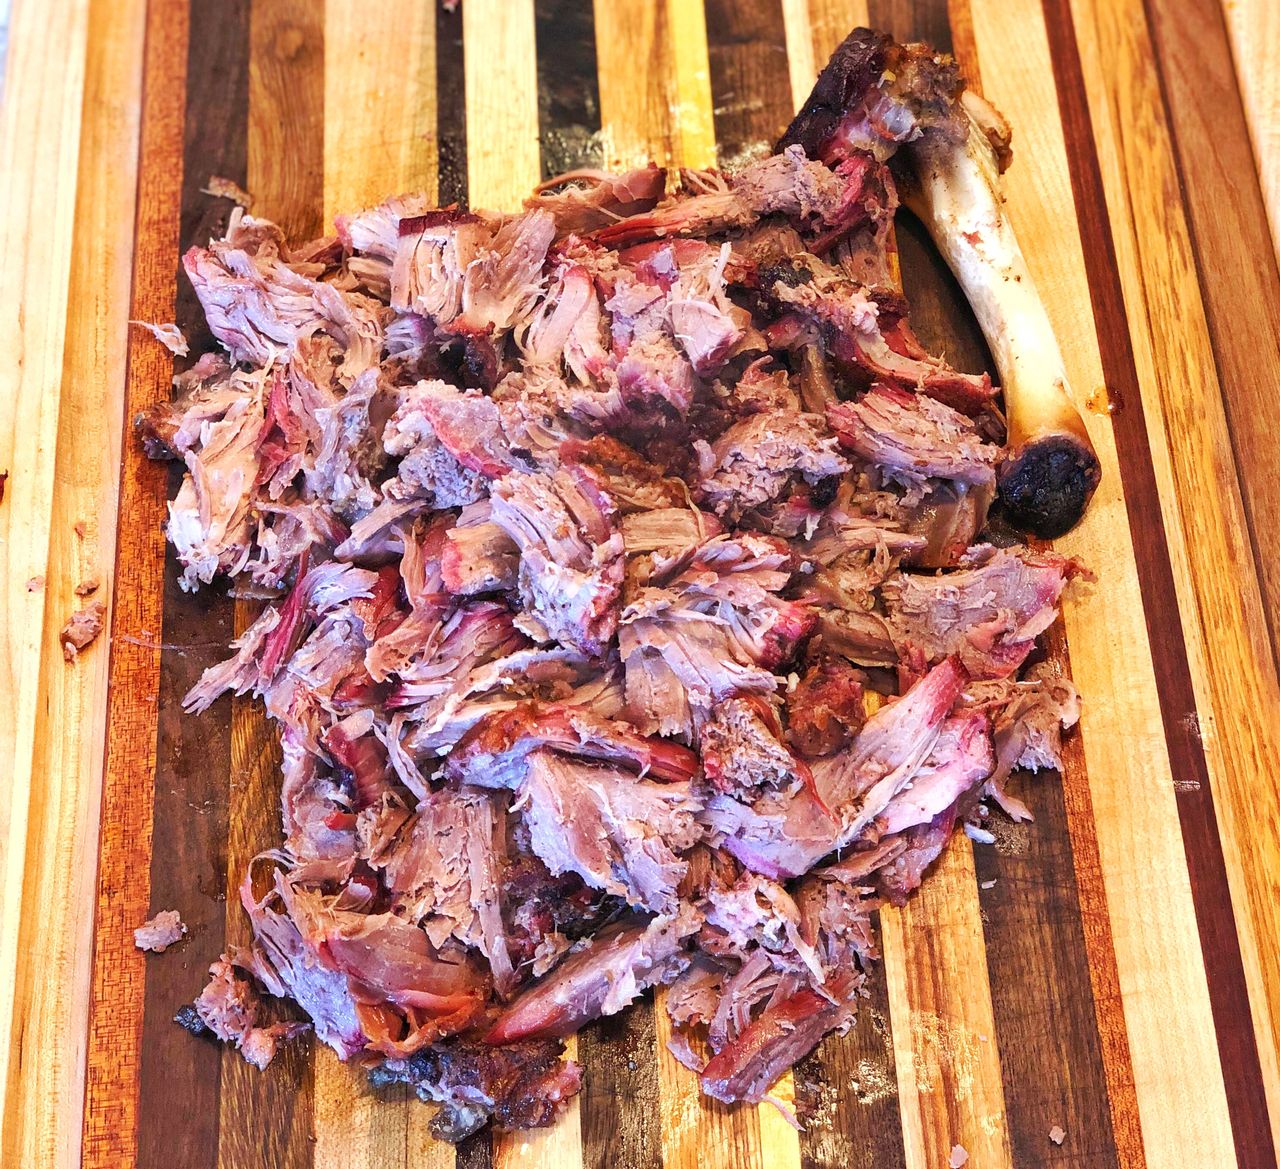 Resting Meat in Bison cooler - Bison Coolers